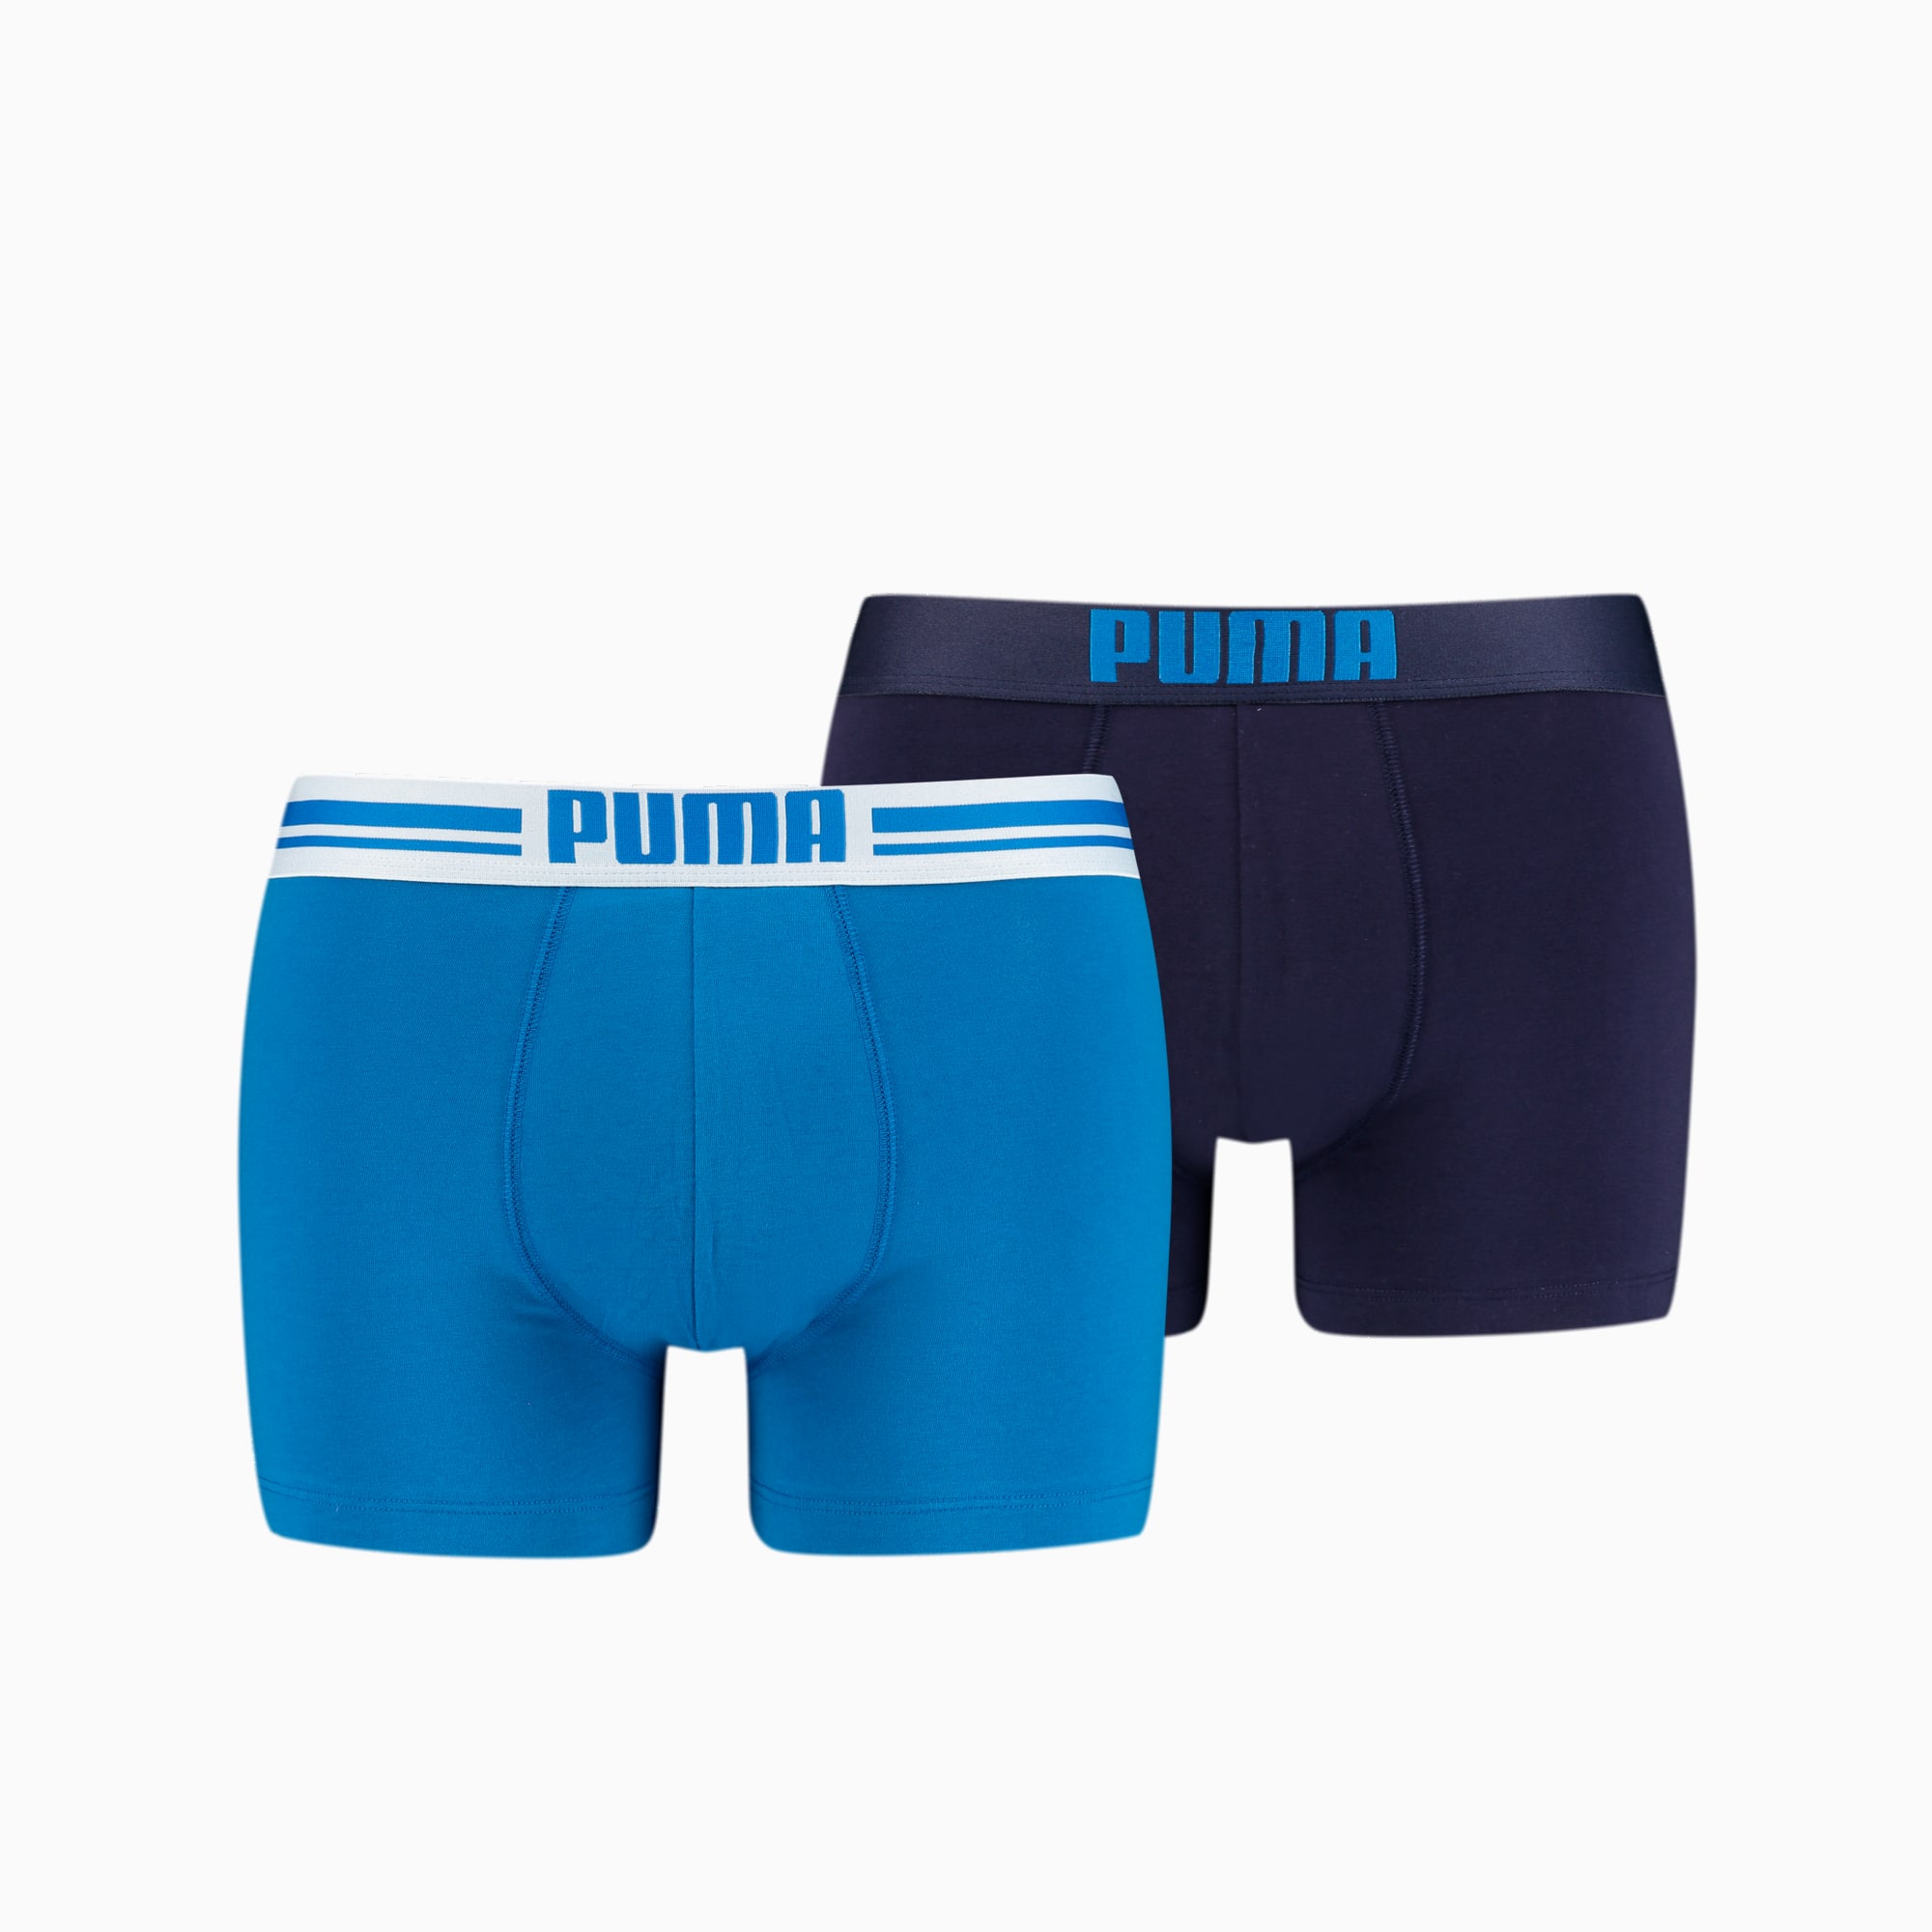 PUMA Placed Logo Men's Boxers 2 Pack | PUMA